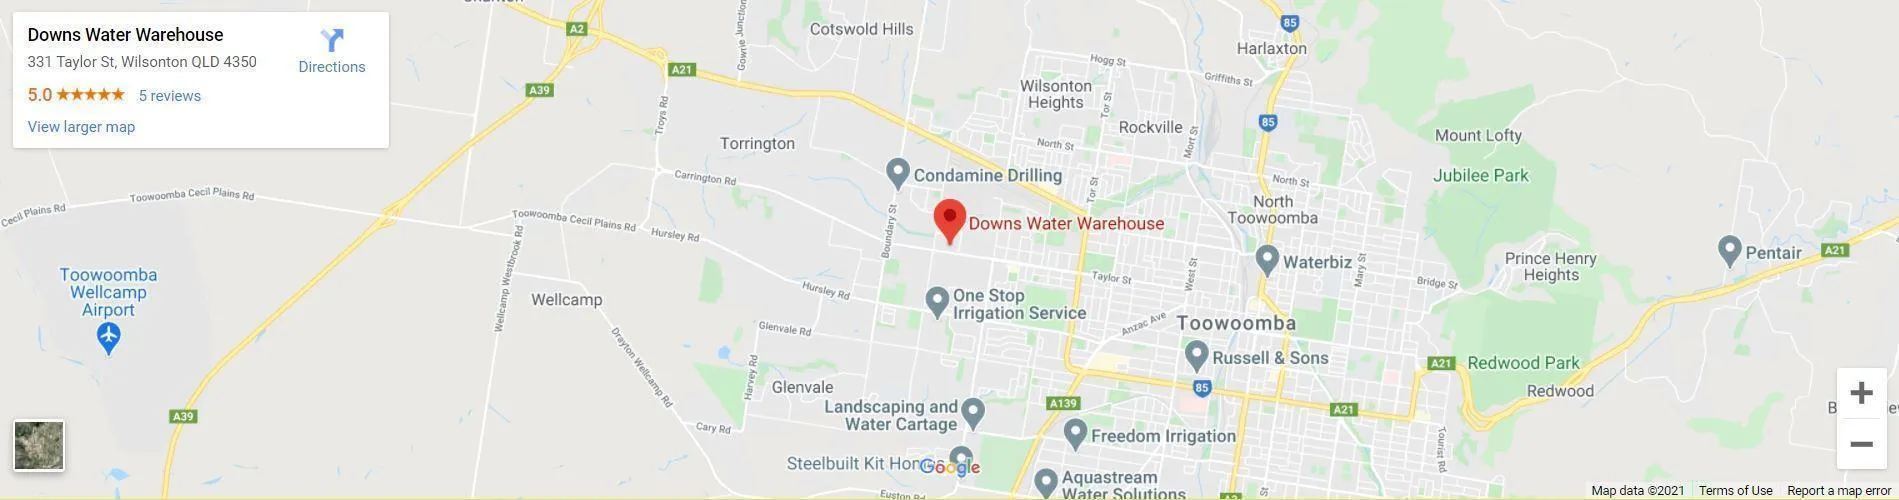 Downs Water Warehouse Google Map